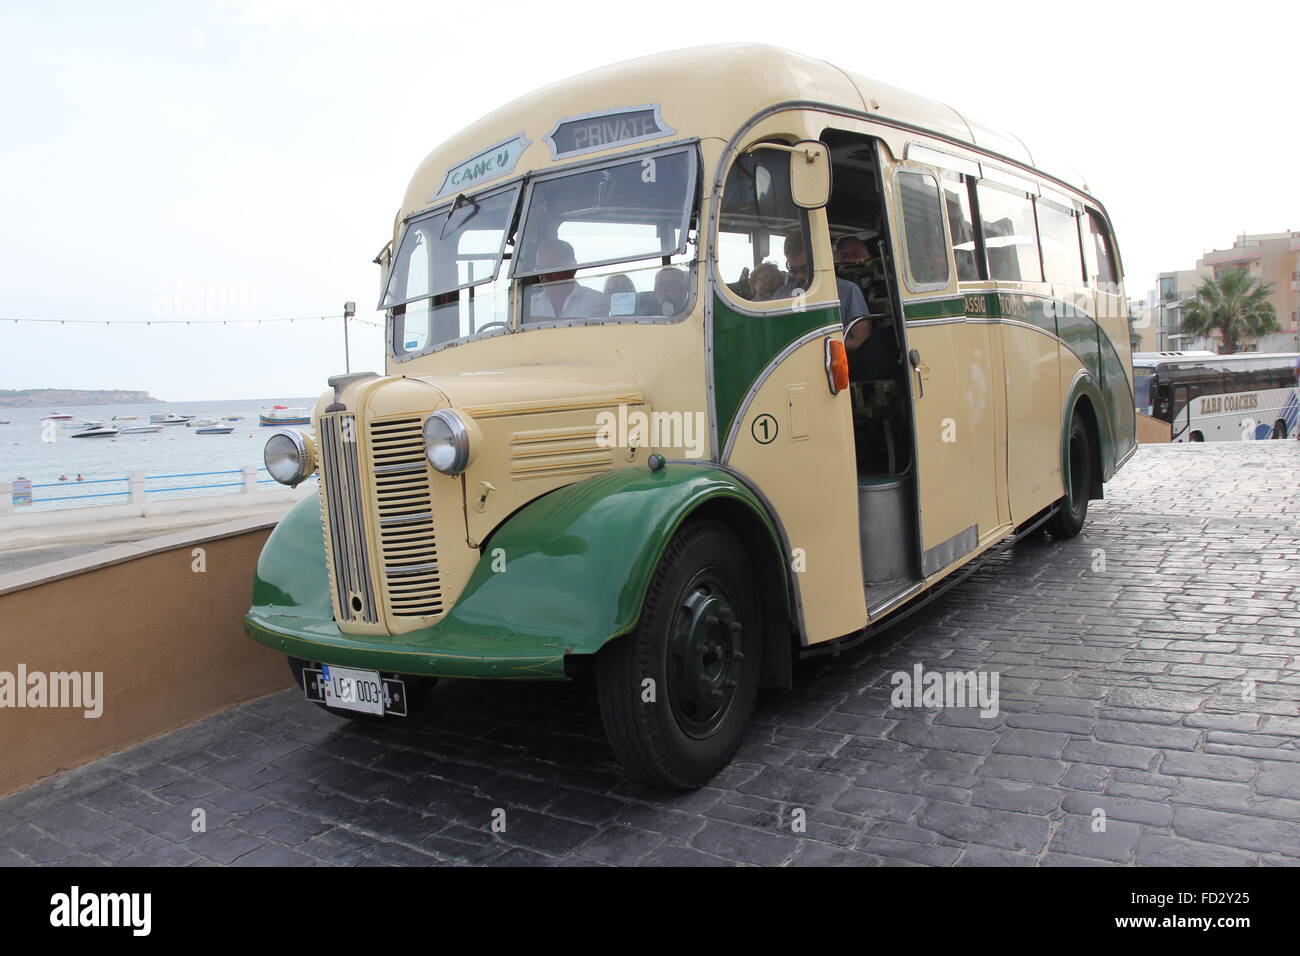 A traditional vintage Malta bus Stock Photo